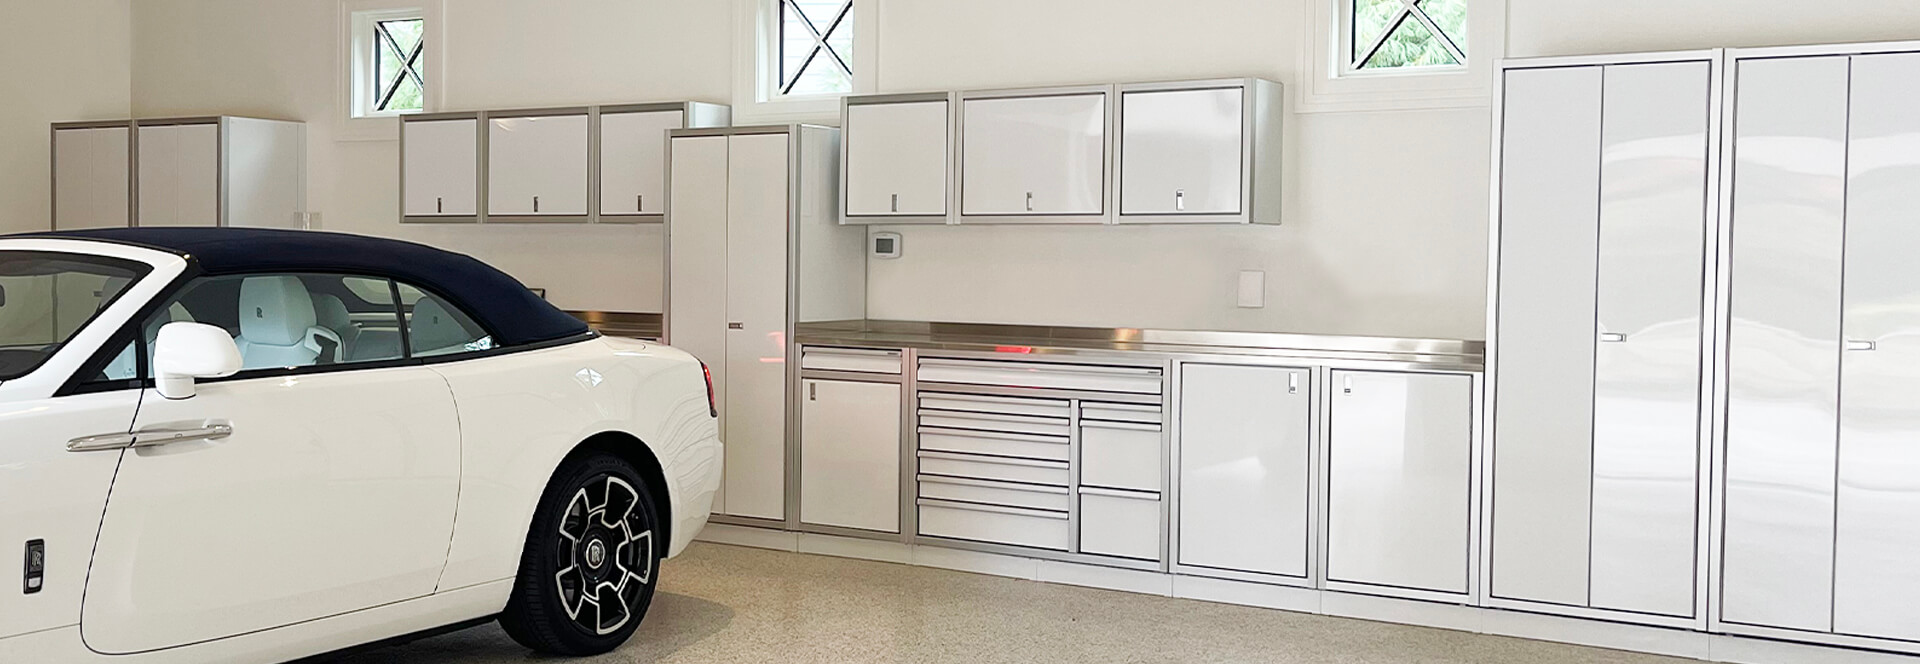 Residential Aluminum Garage Cabinets